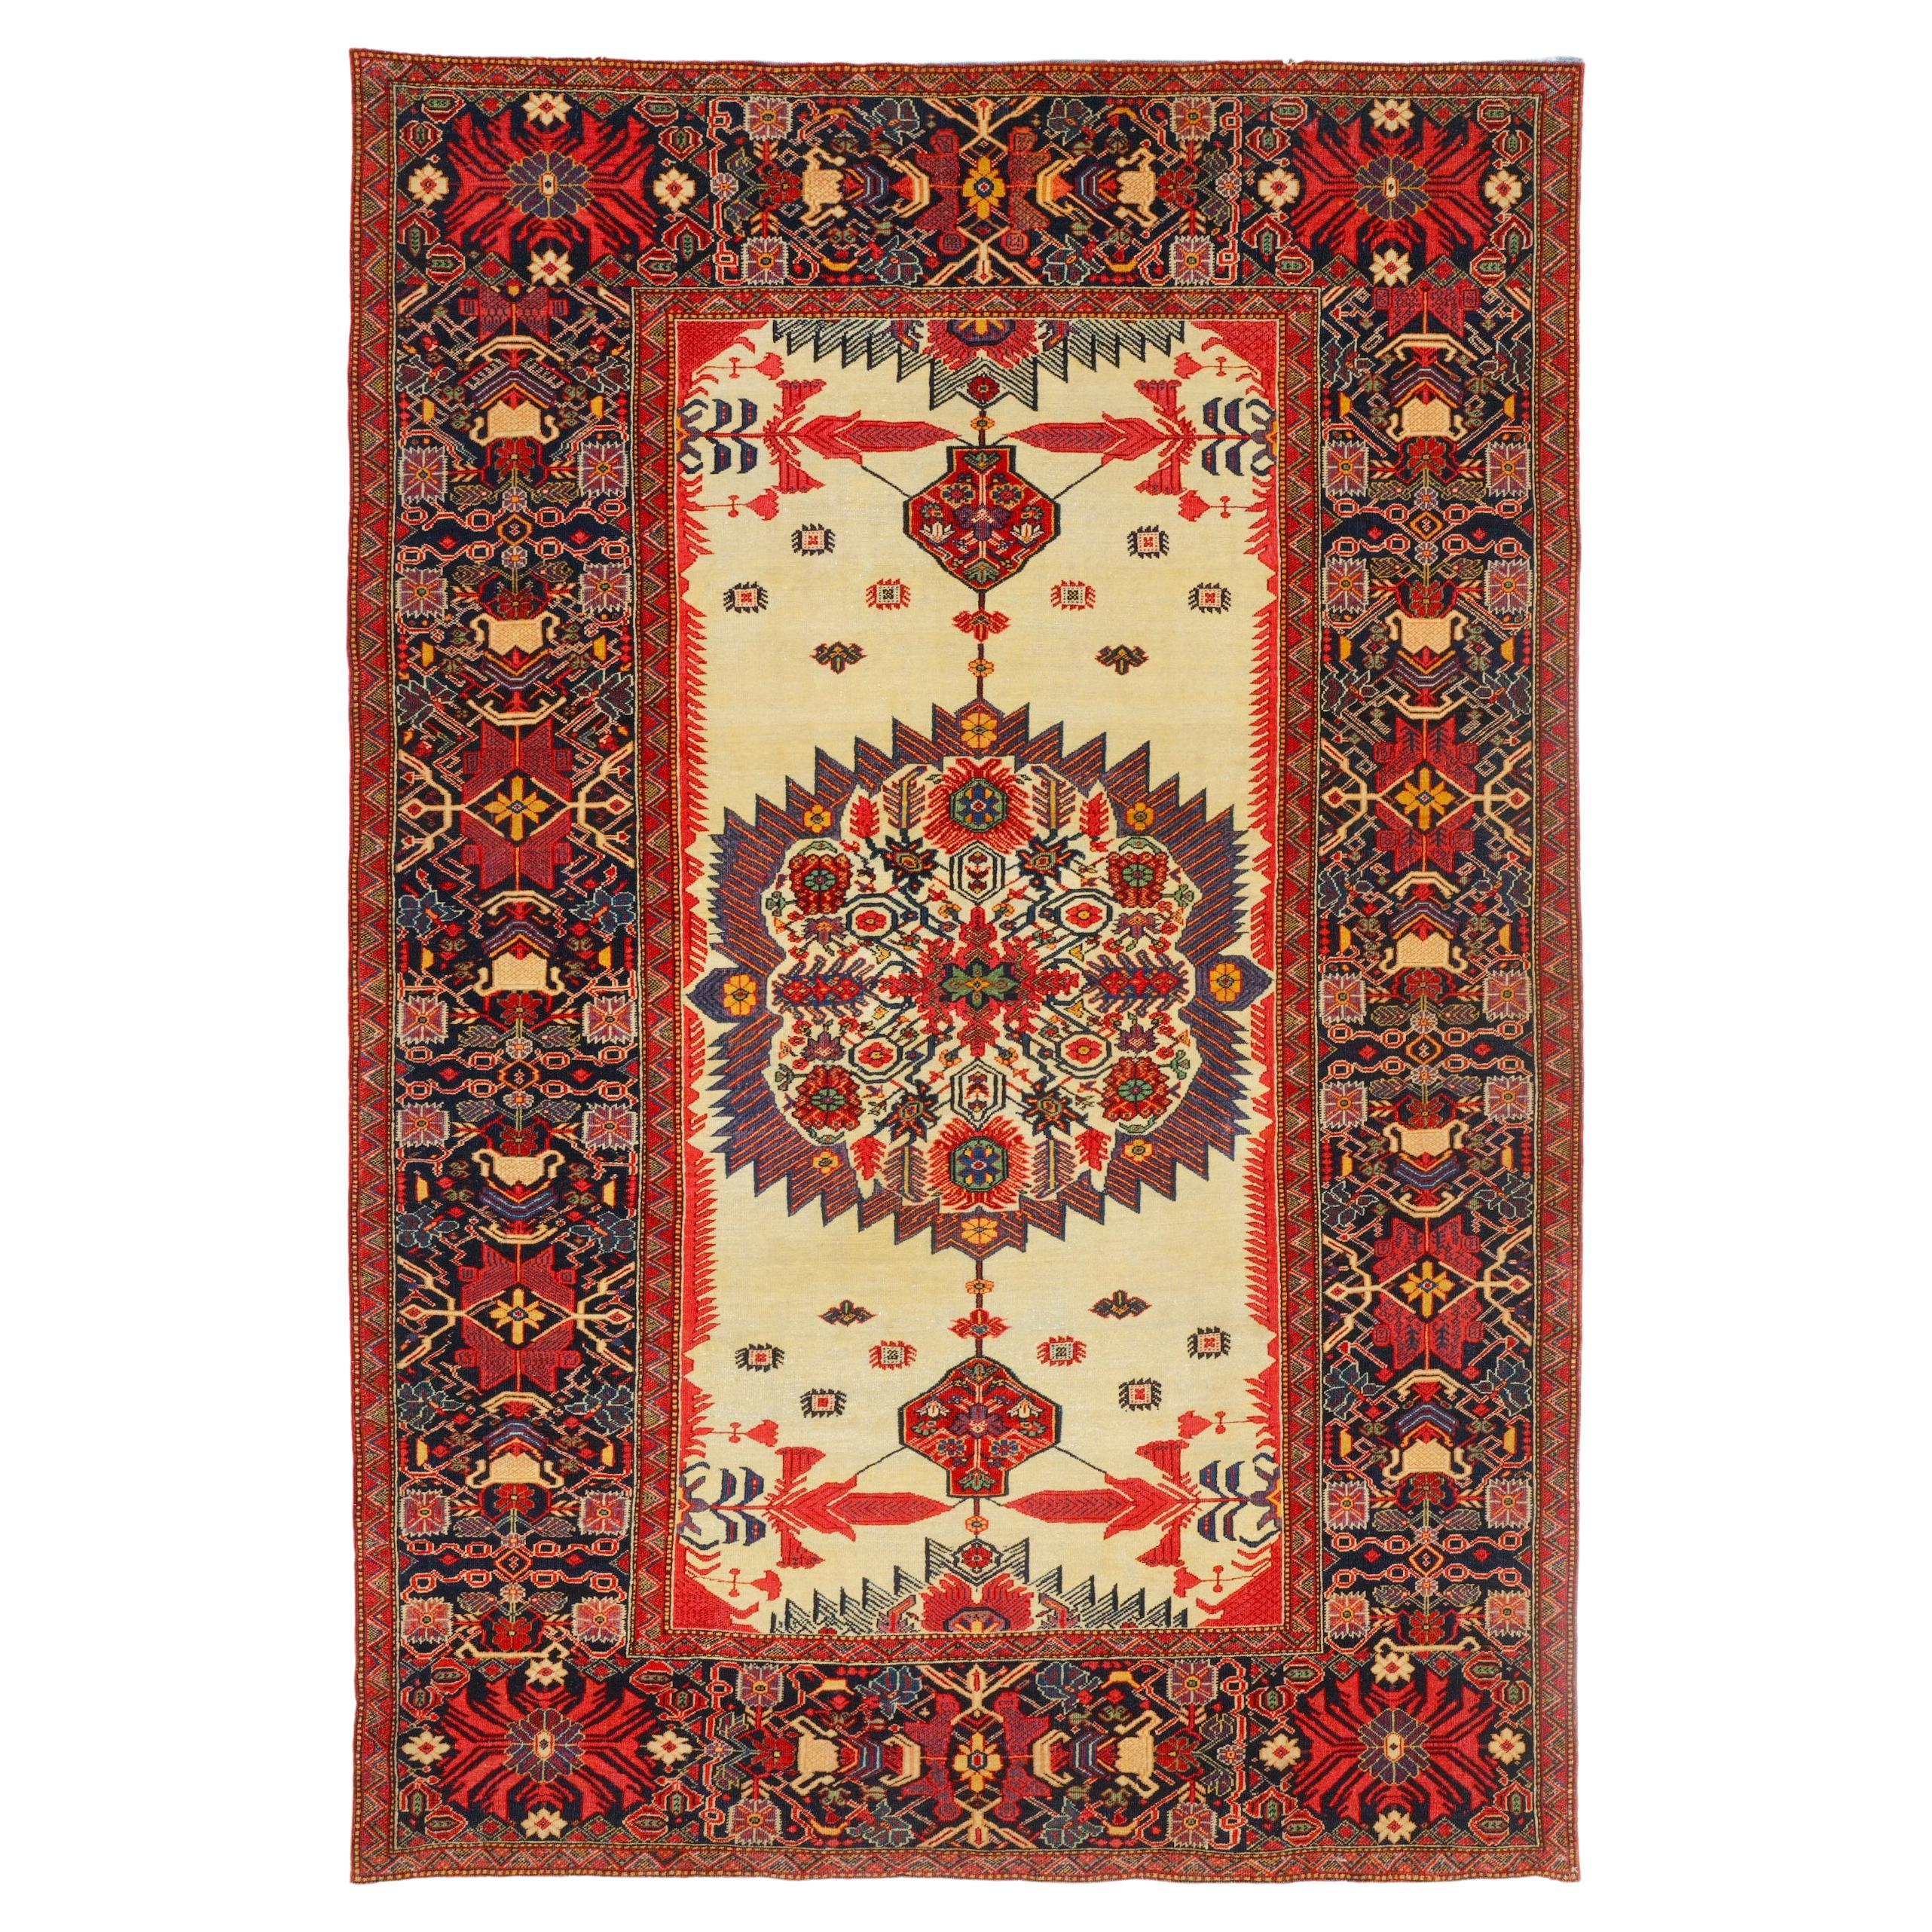 Antique Farahan Sarouk Carpet - Late of 19th Century Sarouk Rug For Sale